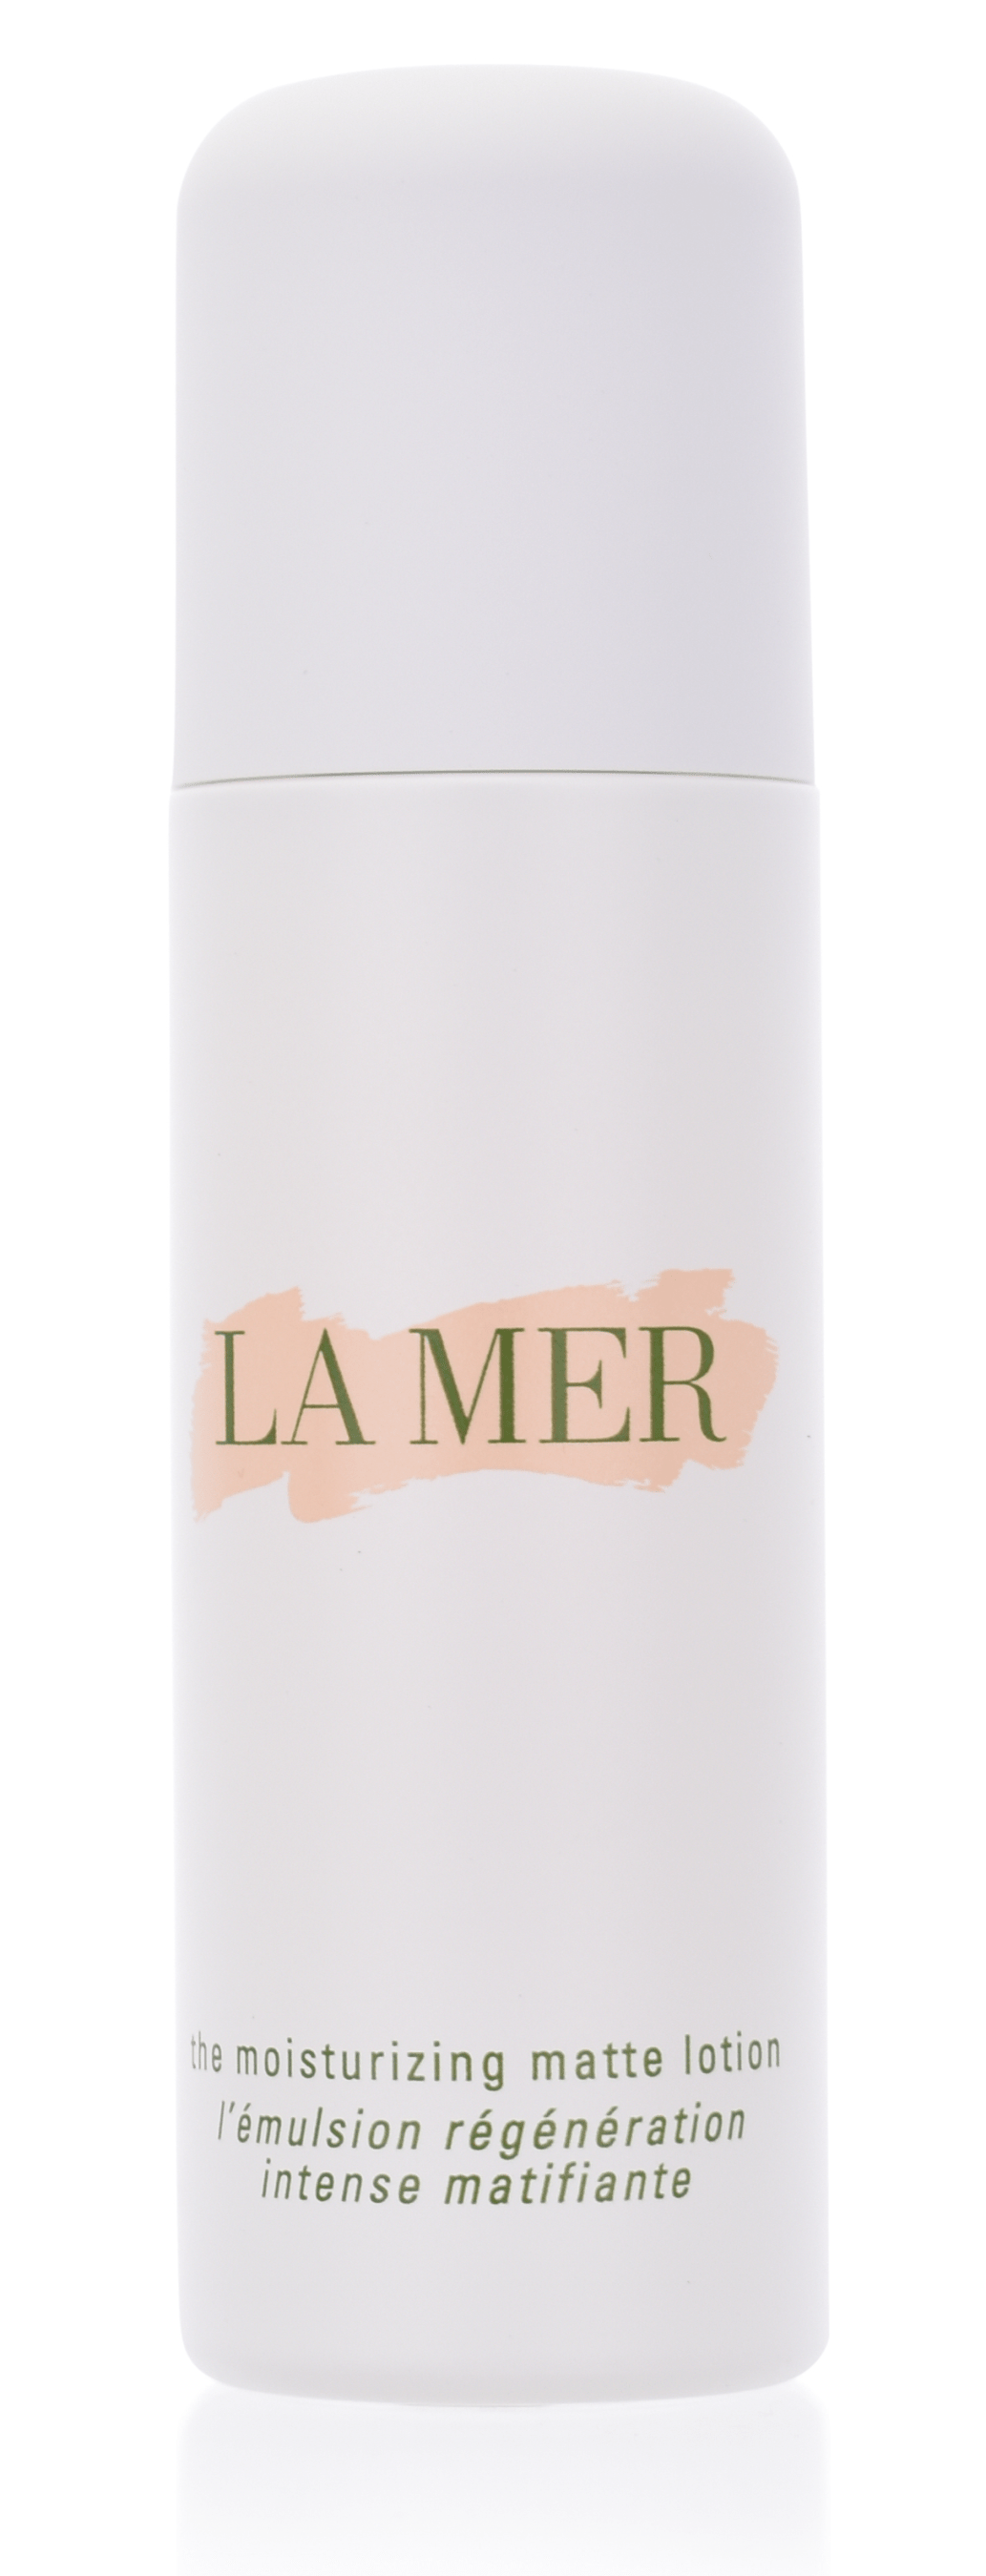 La Mer the moisturizing matte lotion 50 ml   